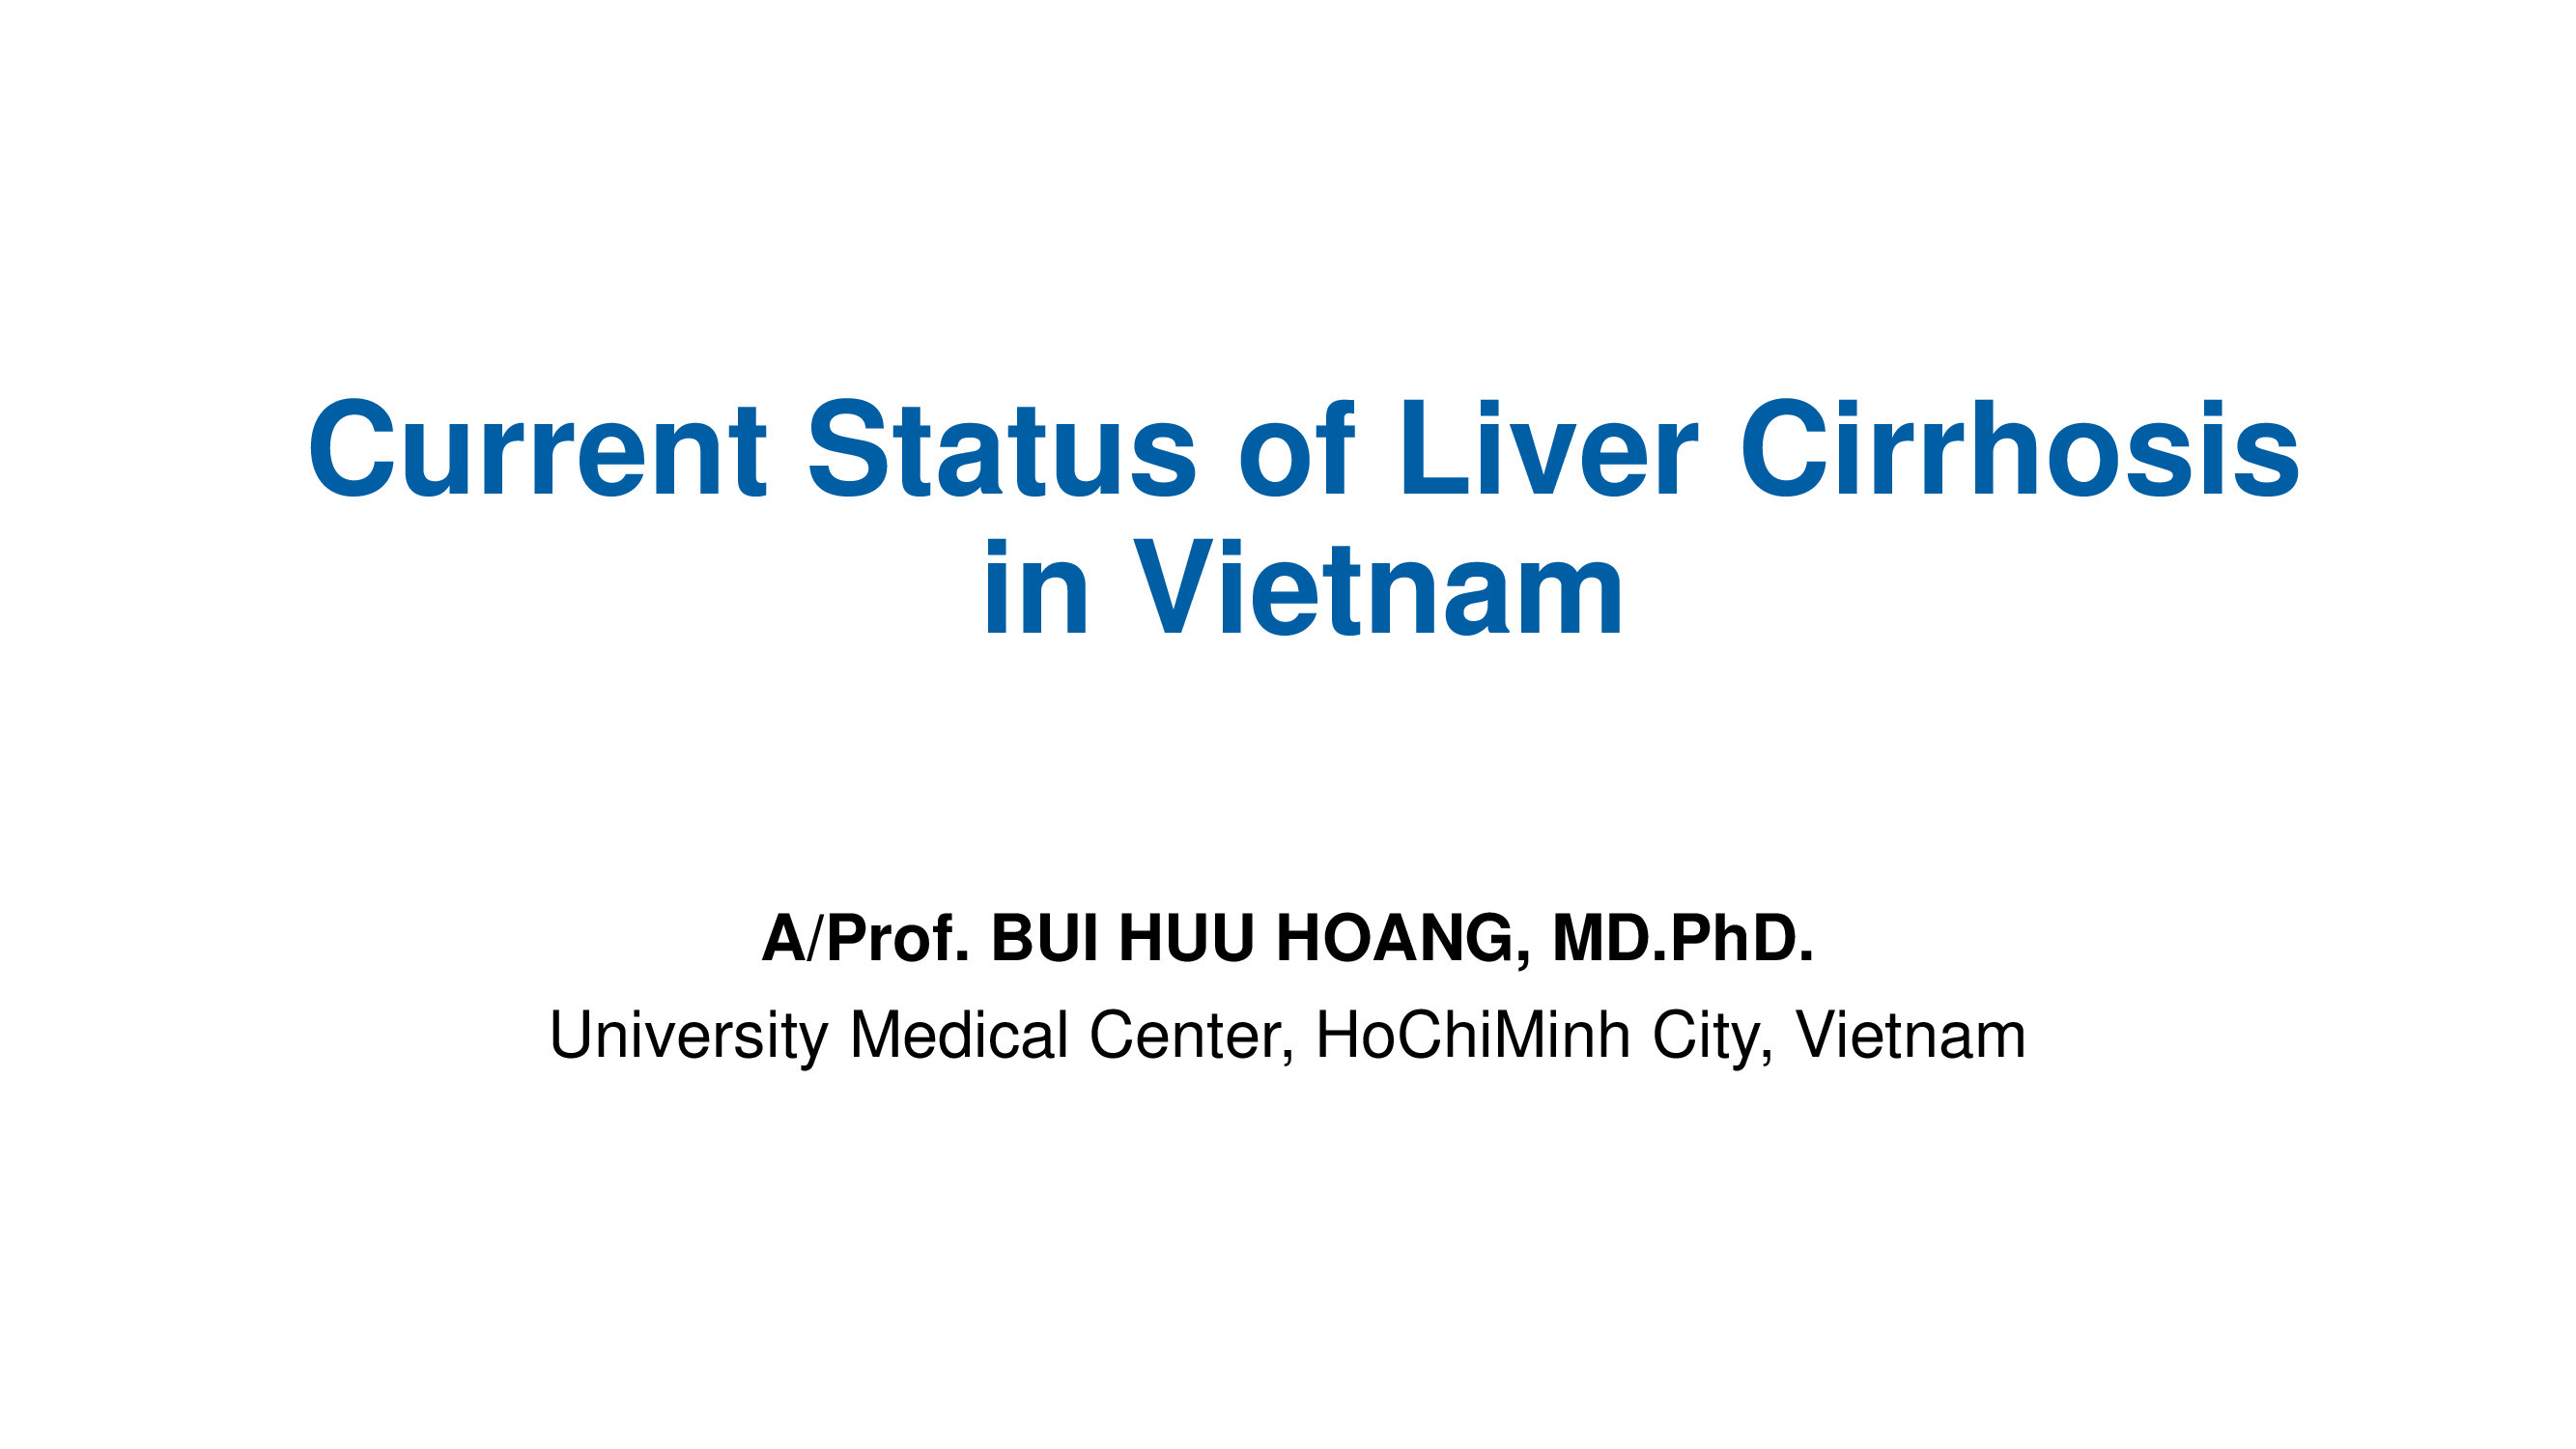 Current Status of Liver Cirrhosis in Vietnam